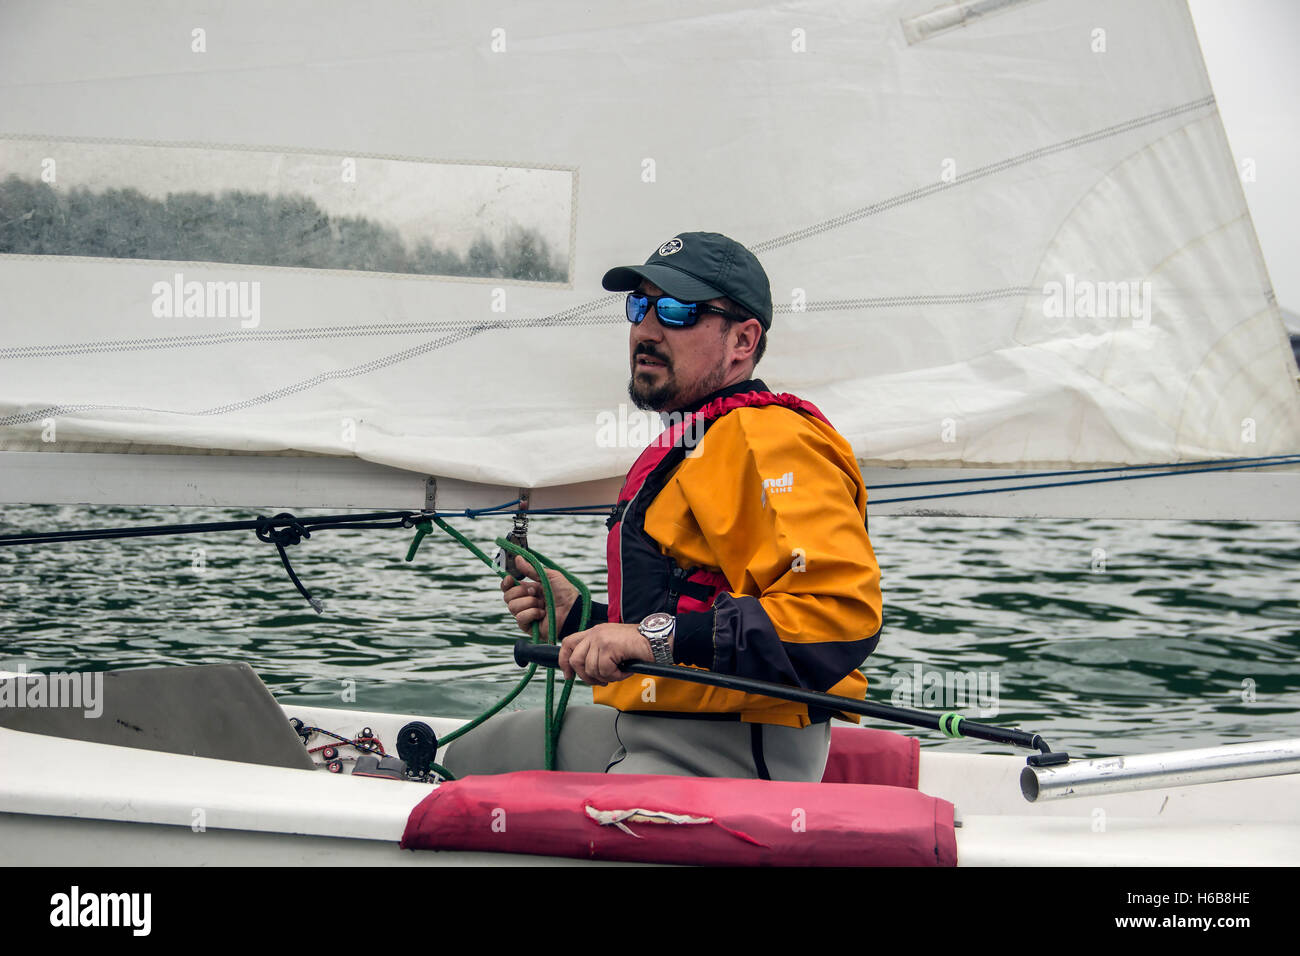 Belgrade Finn Cap 2016, Serbia - Boris Adjanski in the Finn Class sailboat participates in one of the match race regattas Stock Photo